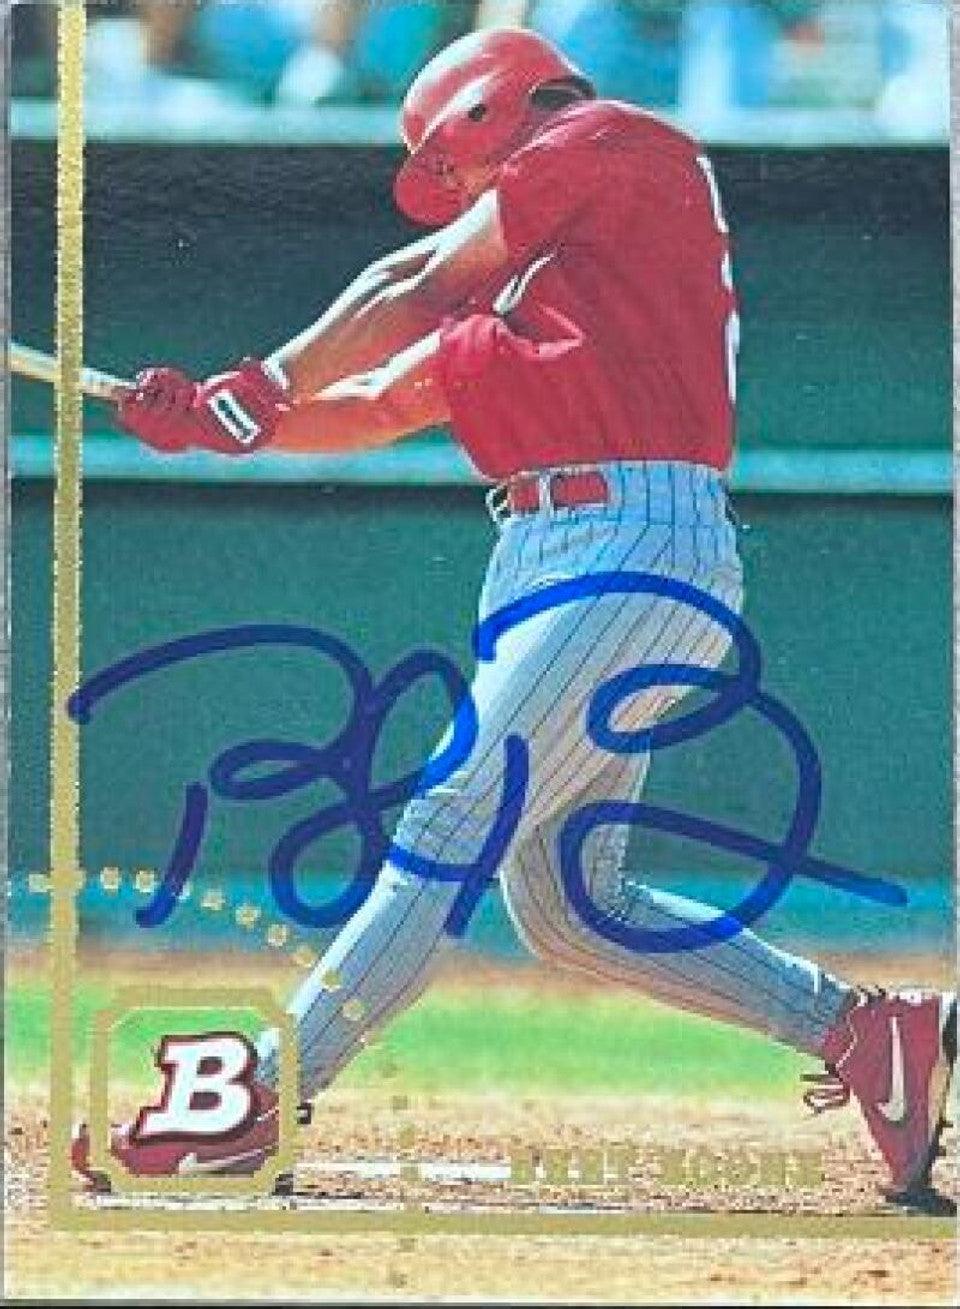 Bret Boone Signed 1994 Bowman Baseball Card - Cincinnati Reds - PastPros